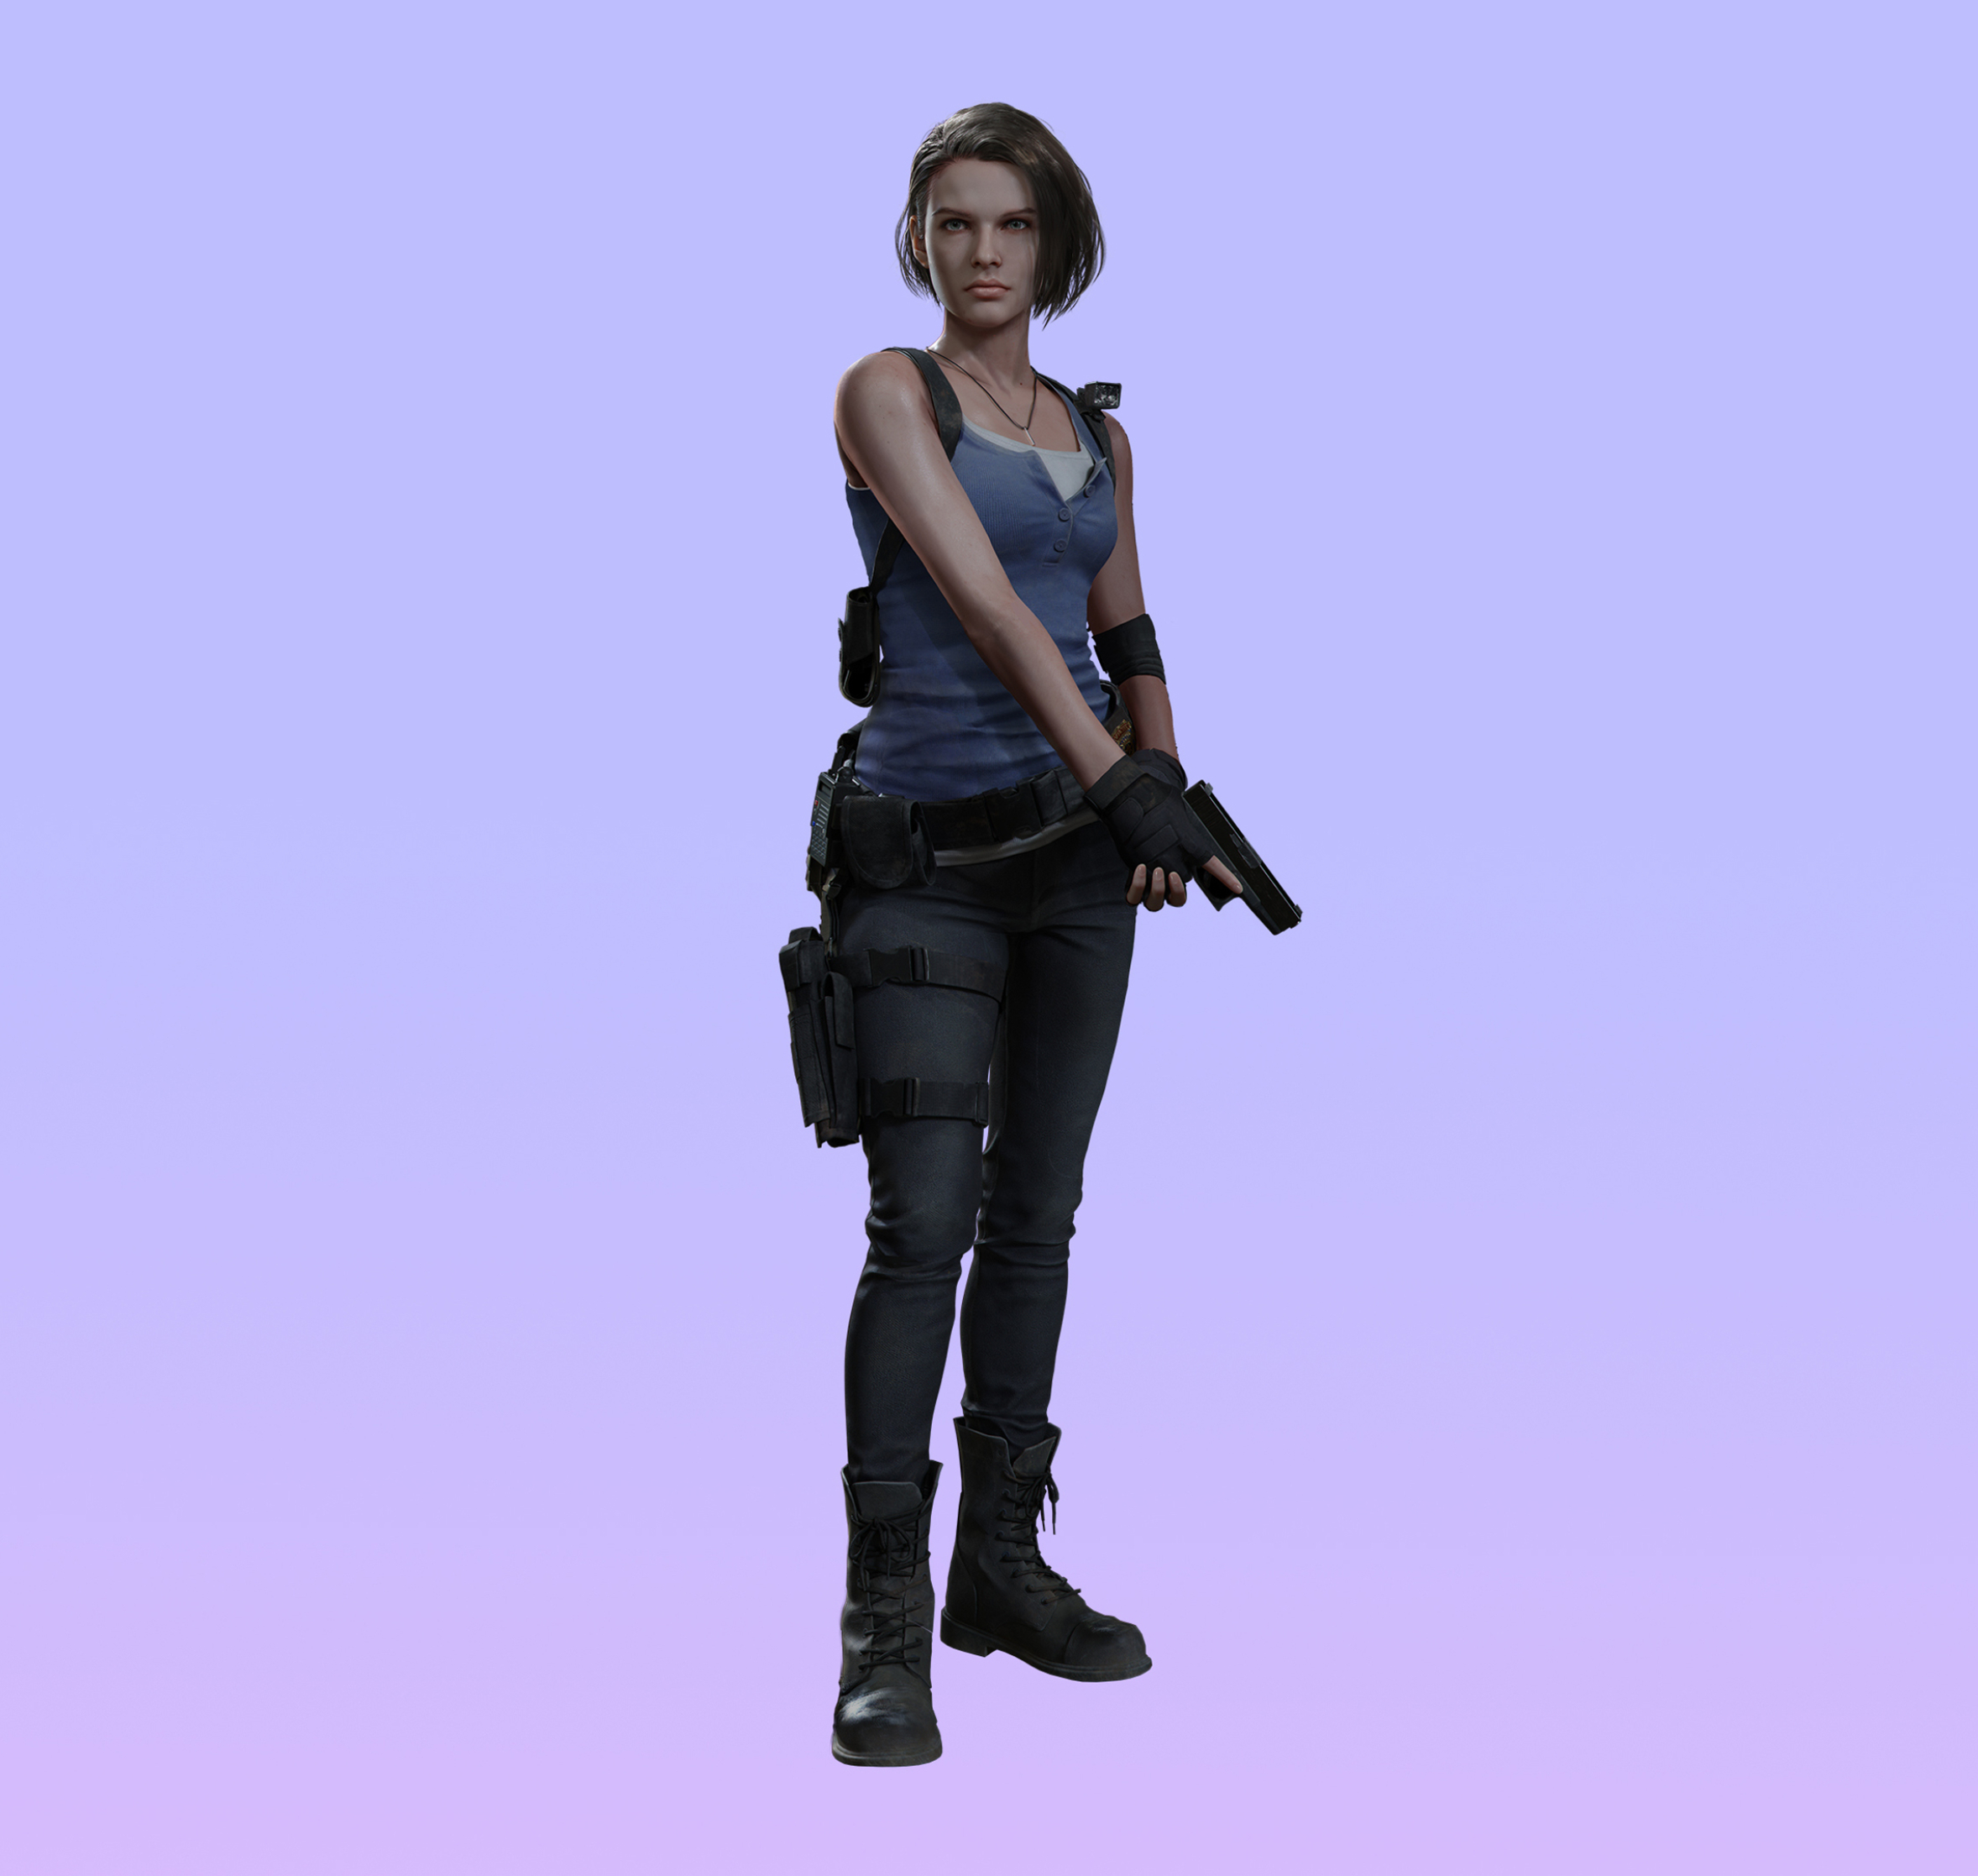 2356x2234 Jill Valentine Resident Evil 3 Remake 4k 2356x2234 Resolution Wallpaper Hd Games 4k 4940